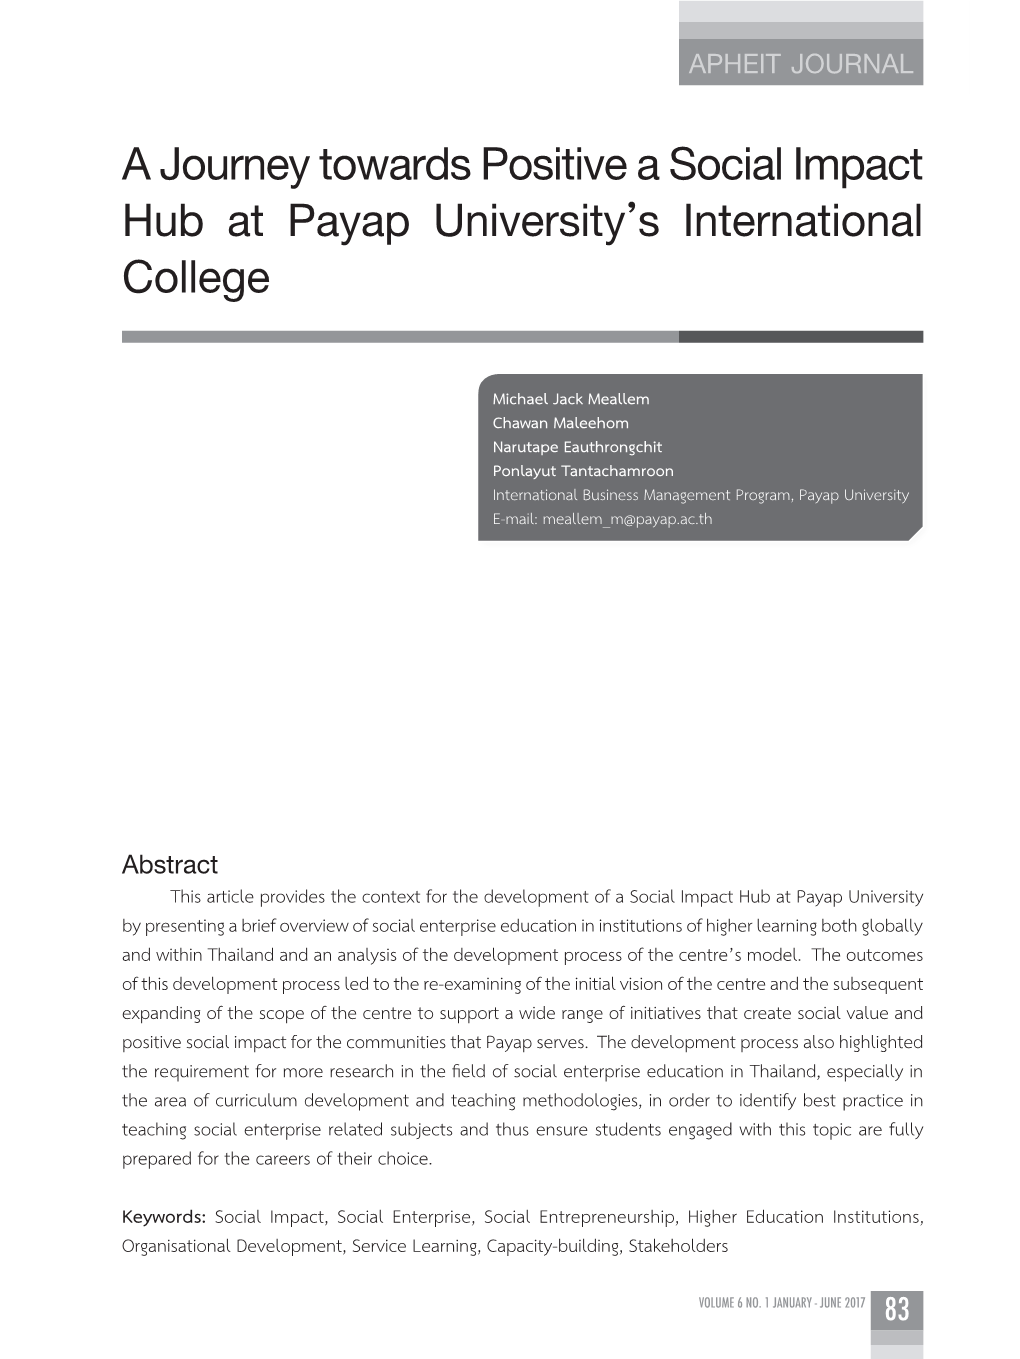 A Journey Towards Positive a Social Impact Hub at Payap University's International College